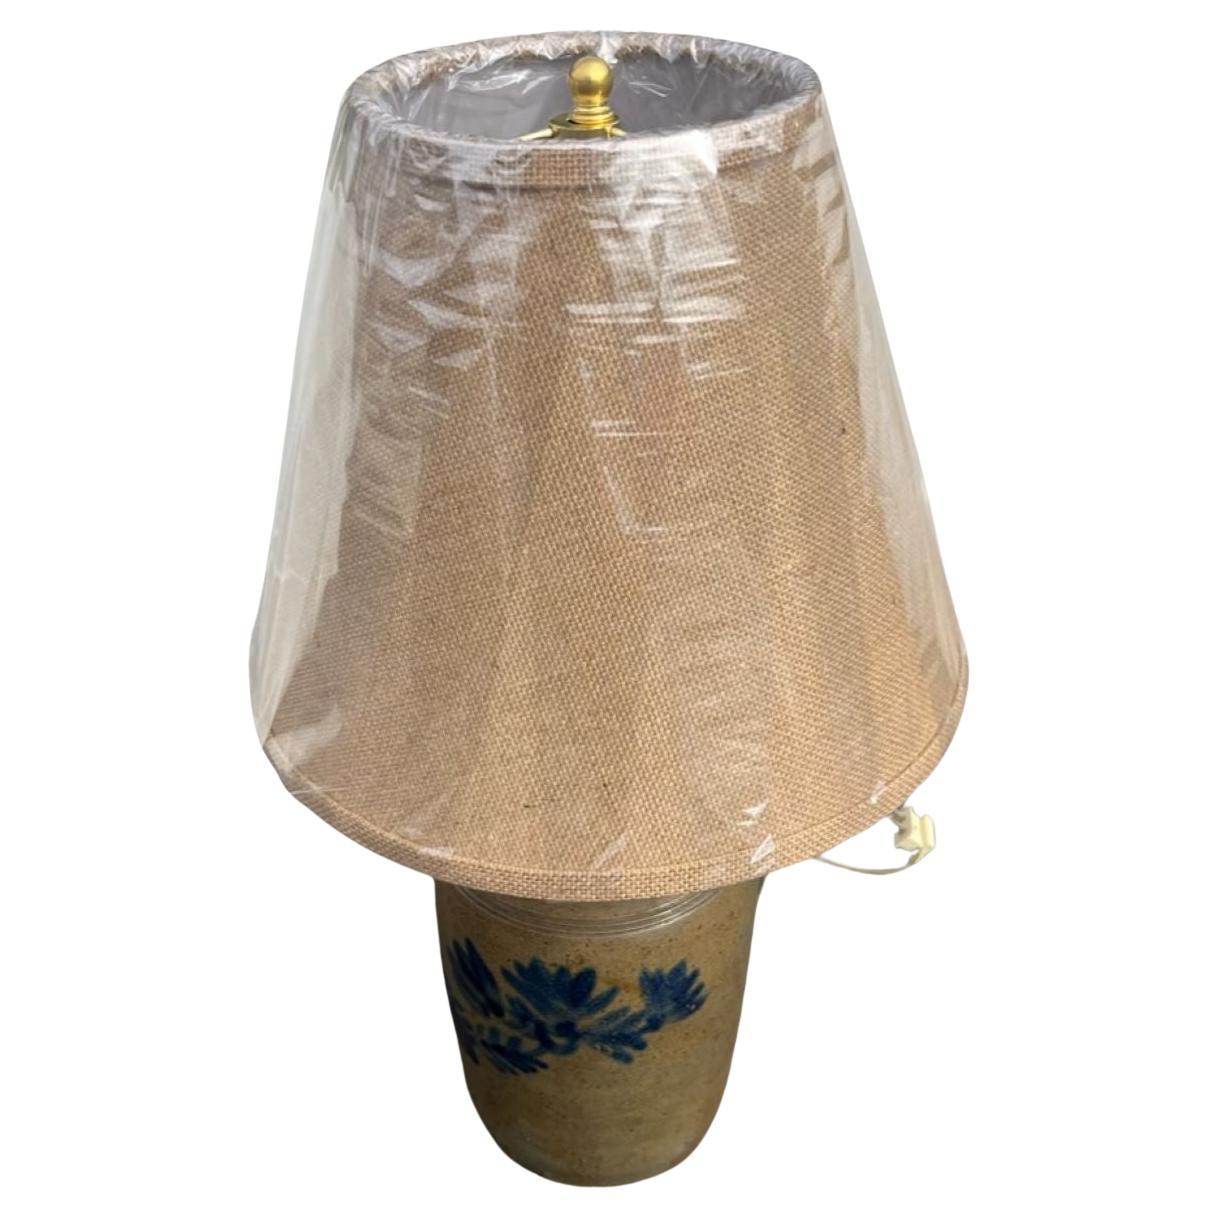 19Thc Decorated Stoneware Lamp W/ Linen Shade